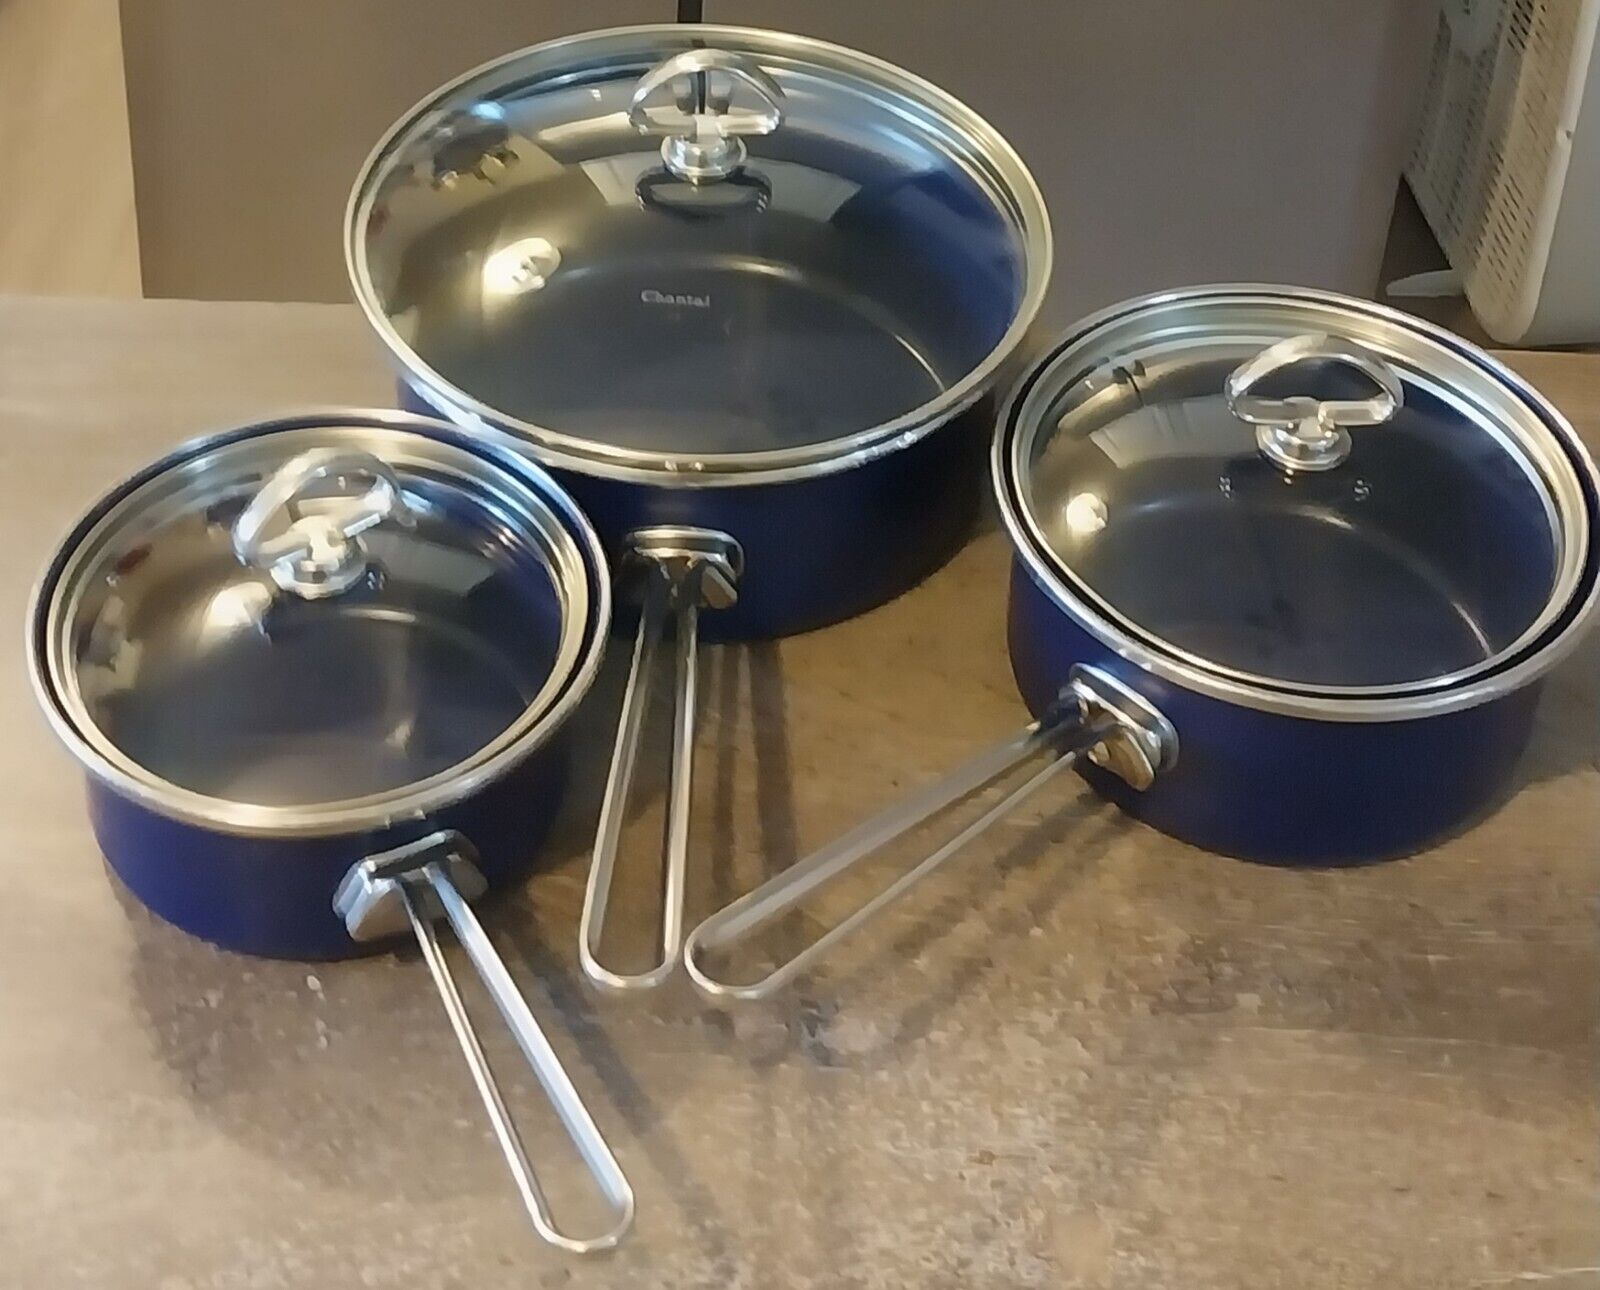 Vintage Chantal Cobalt Blue Enameled Cookware Set - 6-Piece with Lids